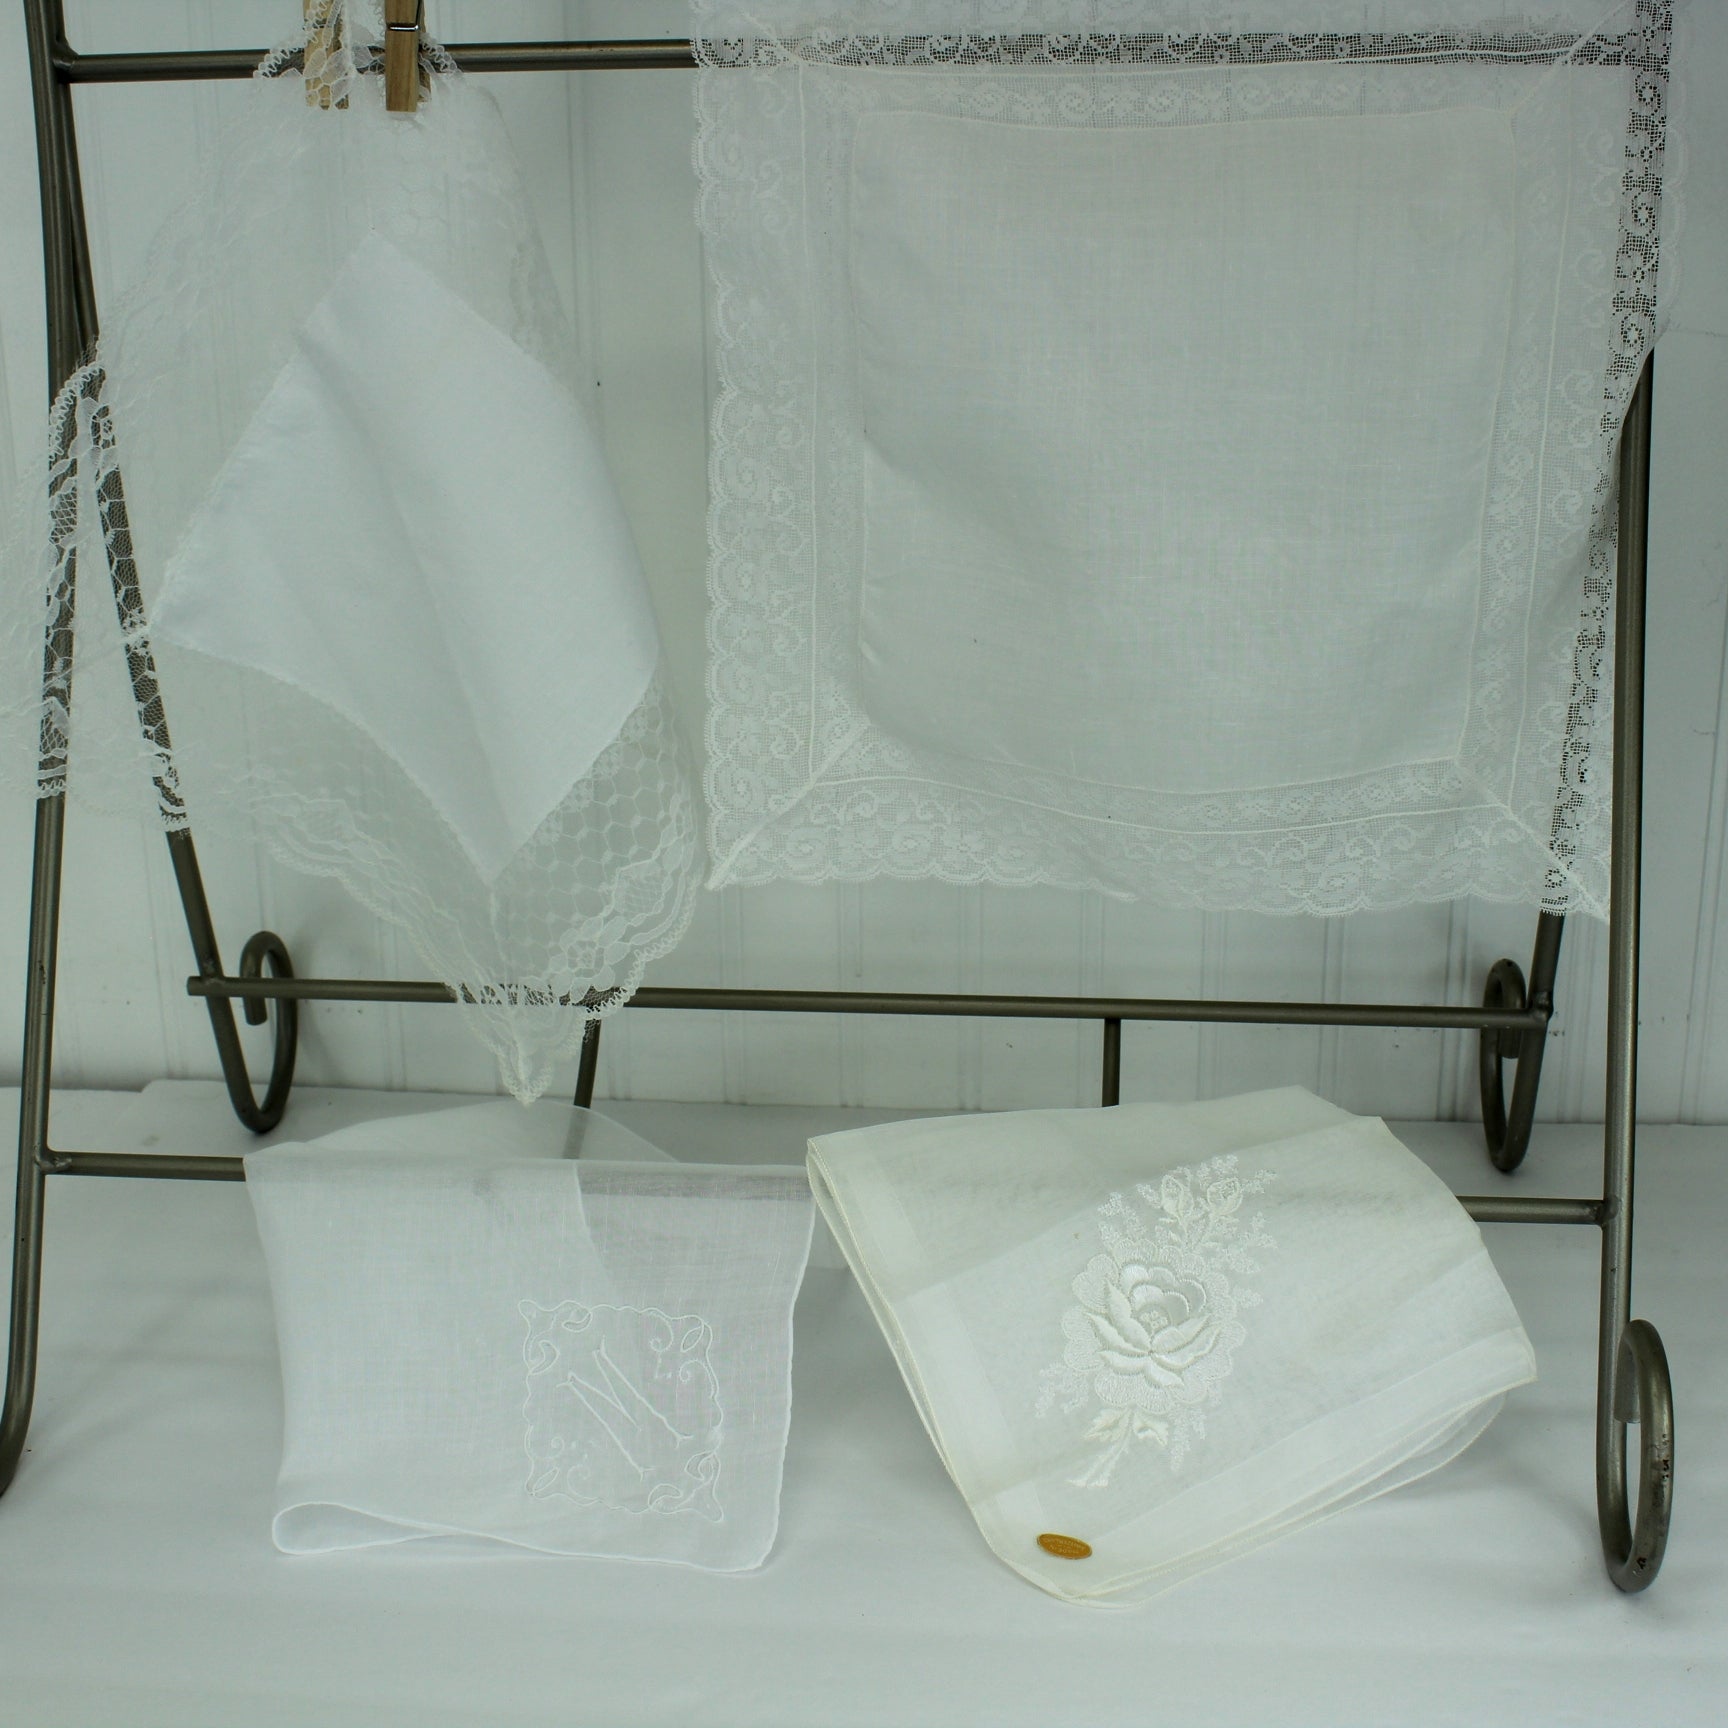 Collection 4 White Wedding Handkerchiefs Swiss Monogram Dbl Lace DIY Crafts 4 white handkerchiefs for DIY project